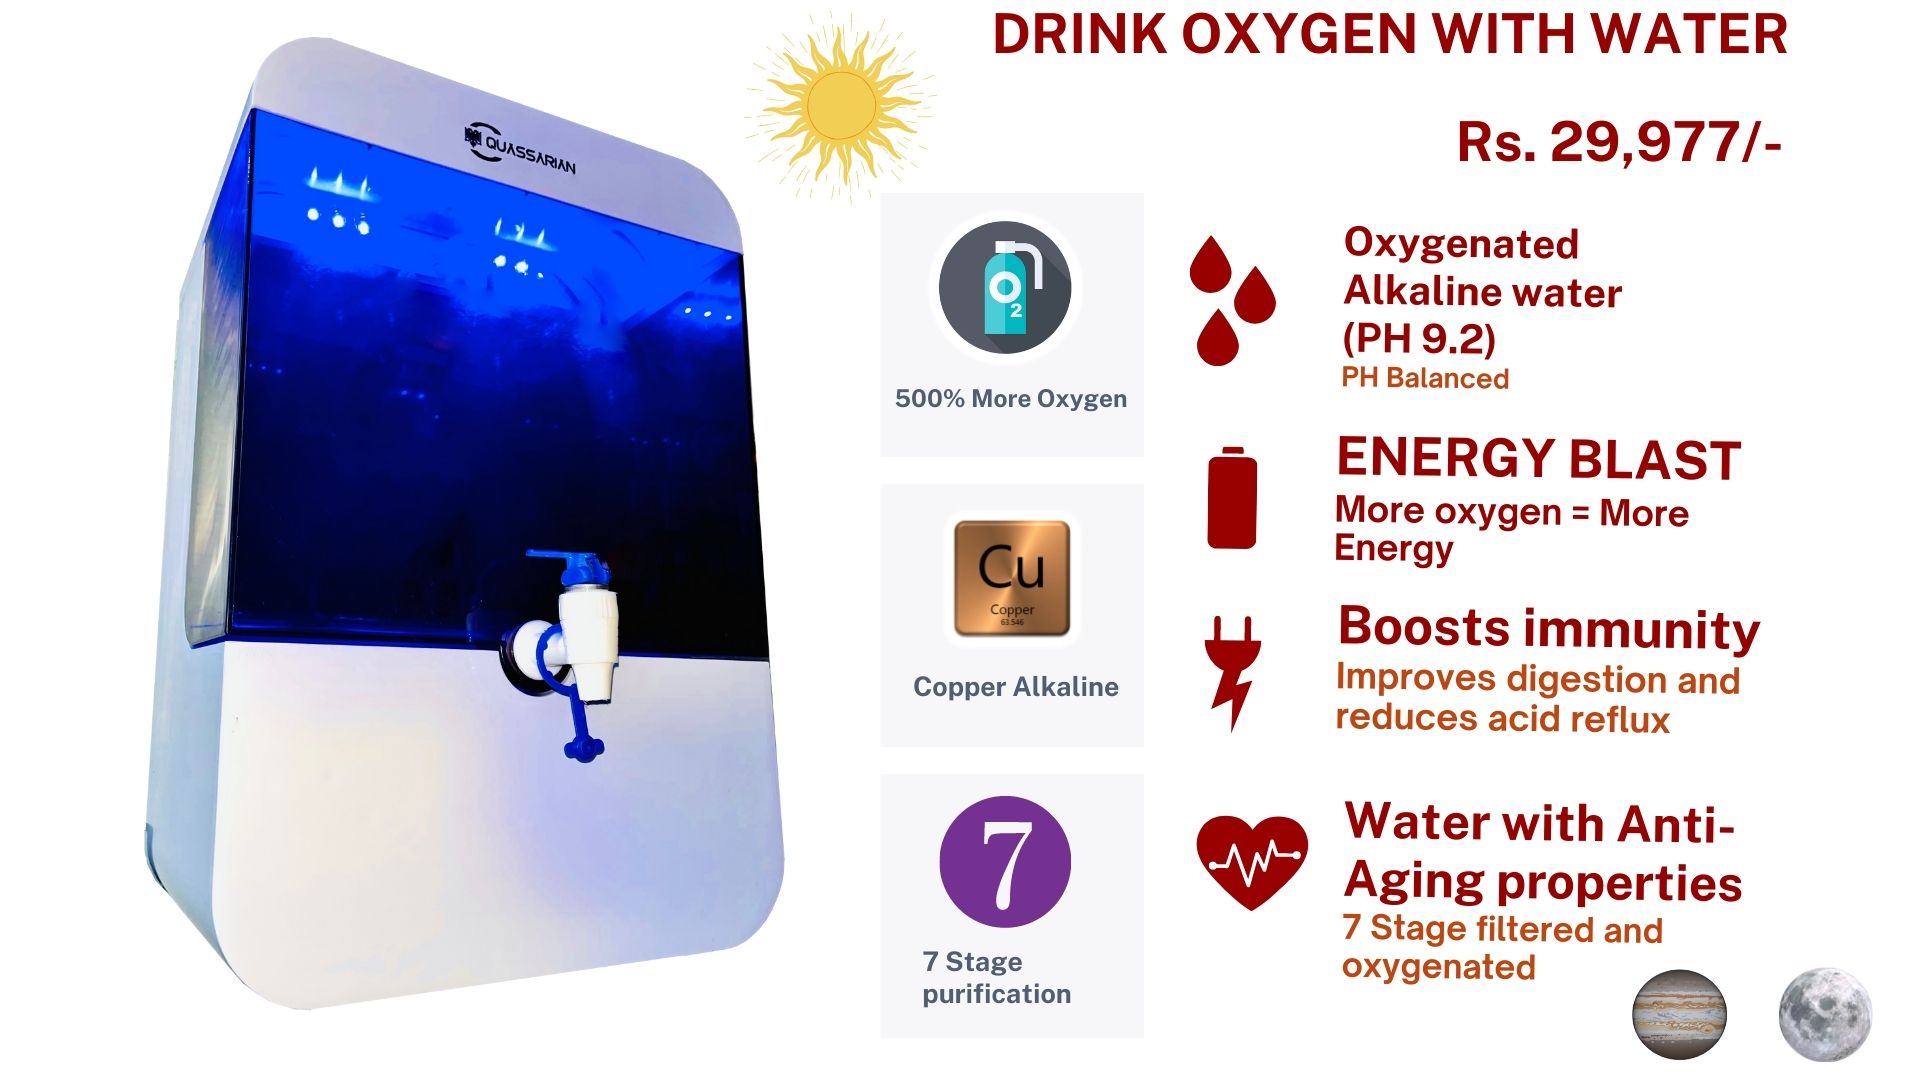 Best Water Purifier and ioniser Quassarian Oxygenator